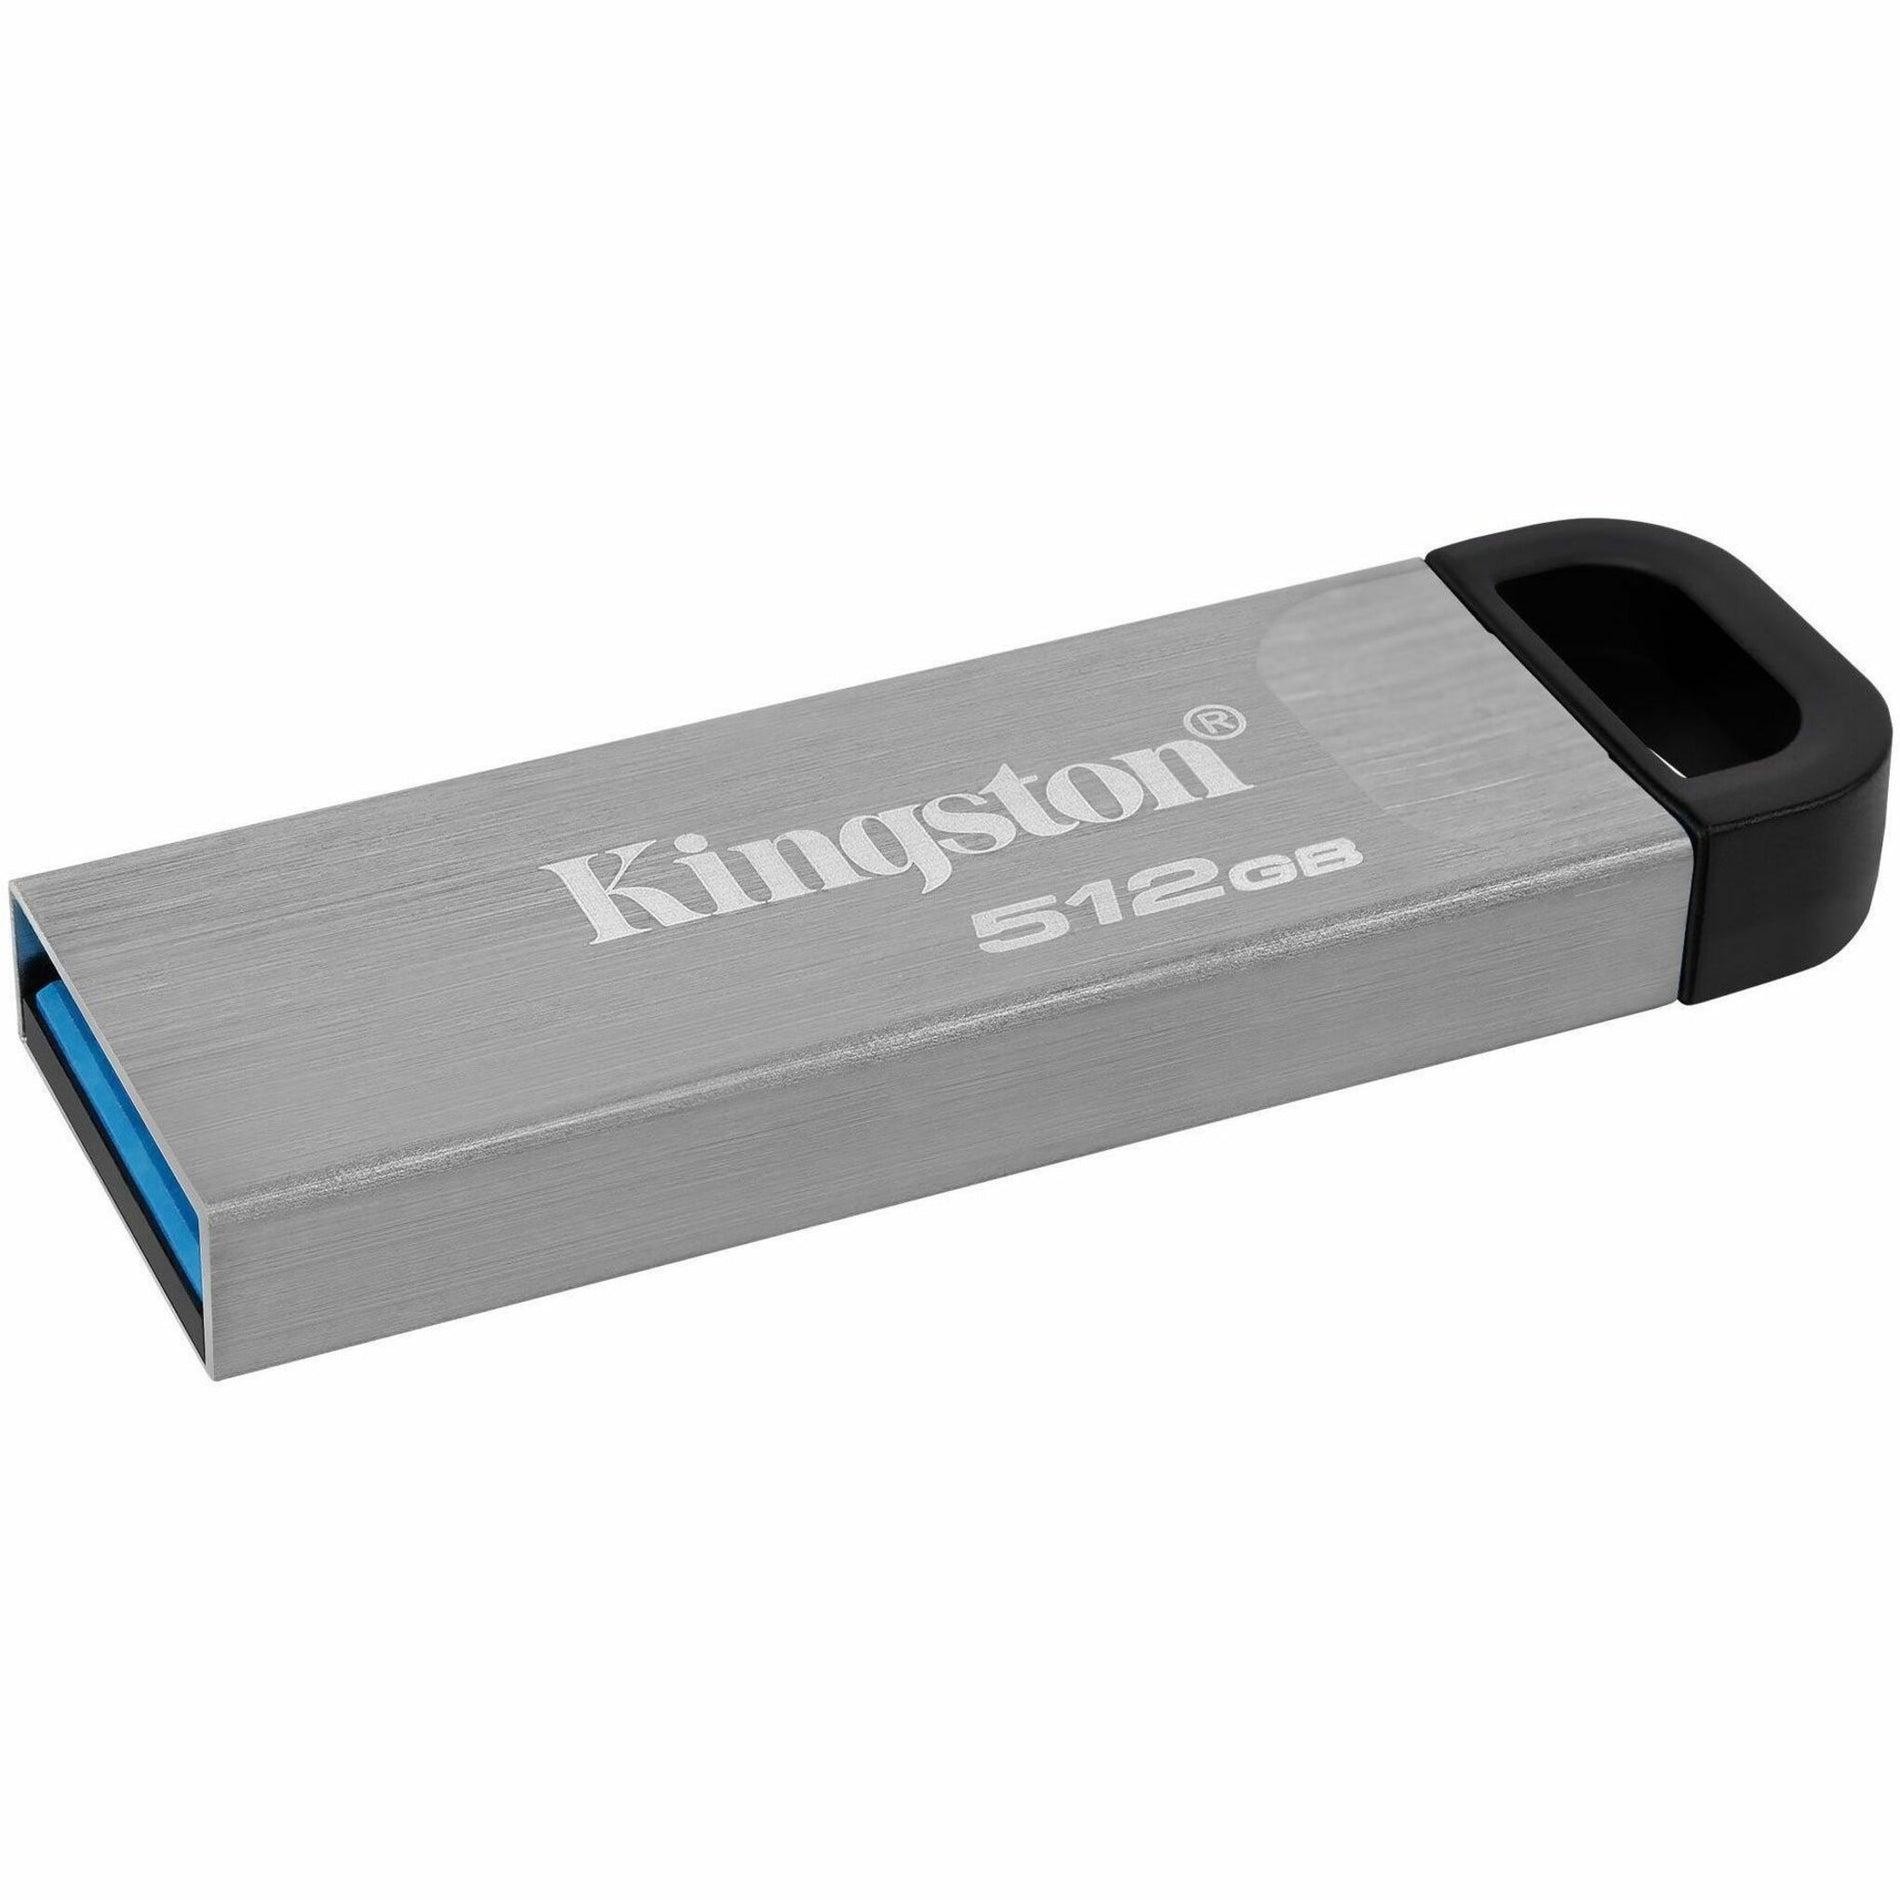 Kingston DTKN/512GB DataTraveler Kyson 512GB USB 3.2 (Gen 1) Type A Flash Drive, Compact, Lightweight, Durable, Key Ring, Capless